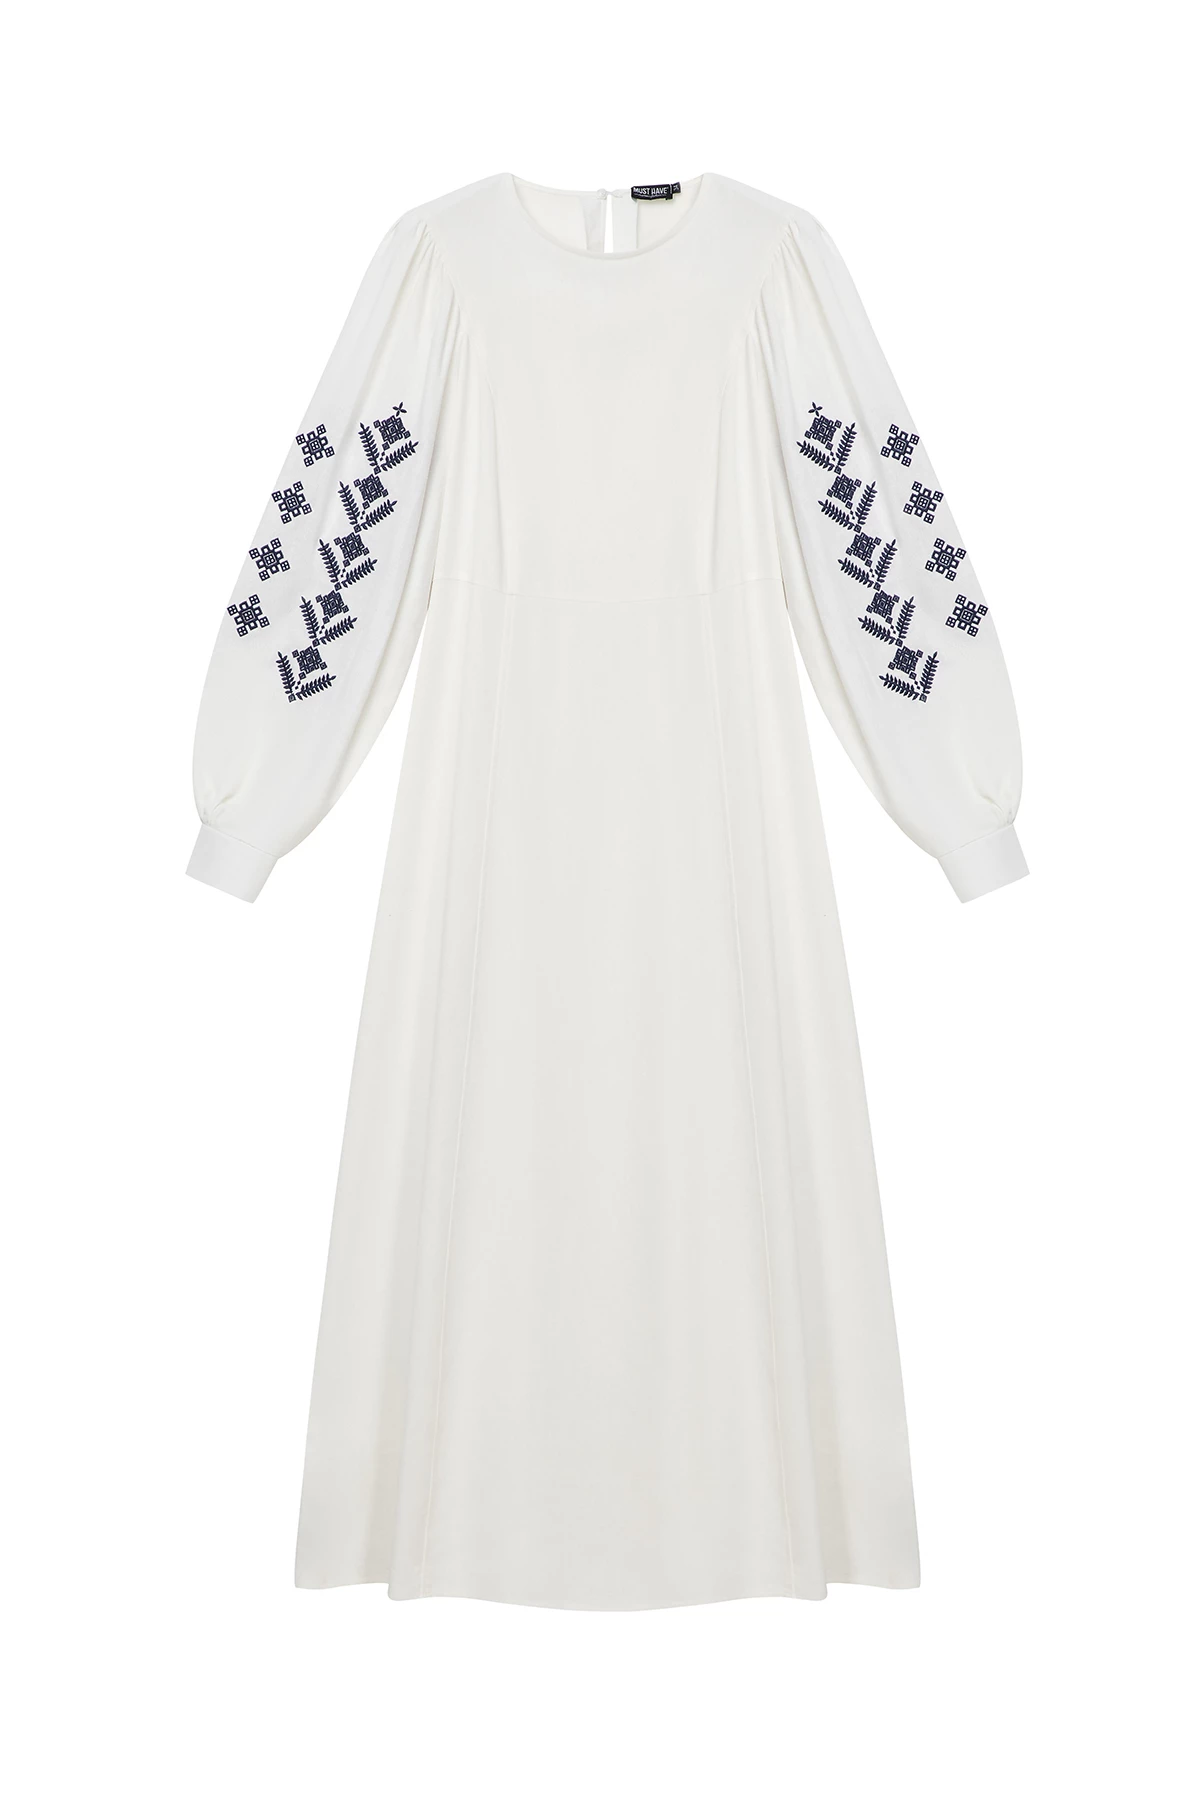 Milky linen vyshyvanka dress with rhombus embroidery, photo 7